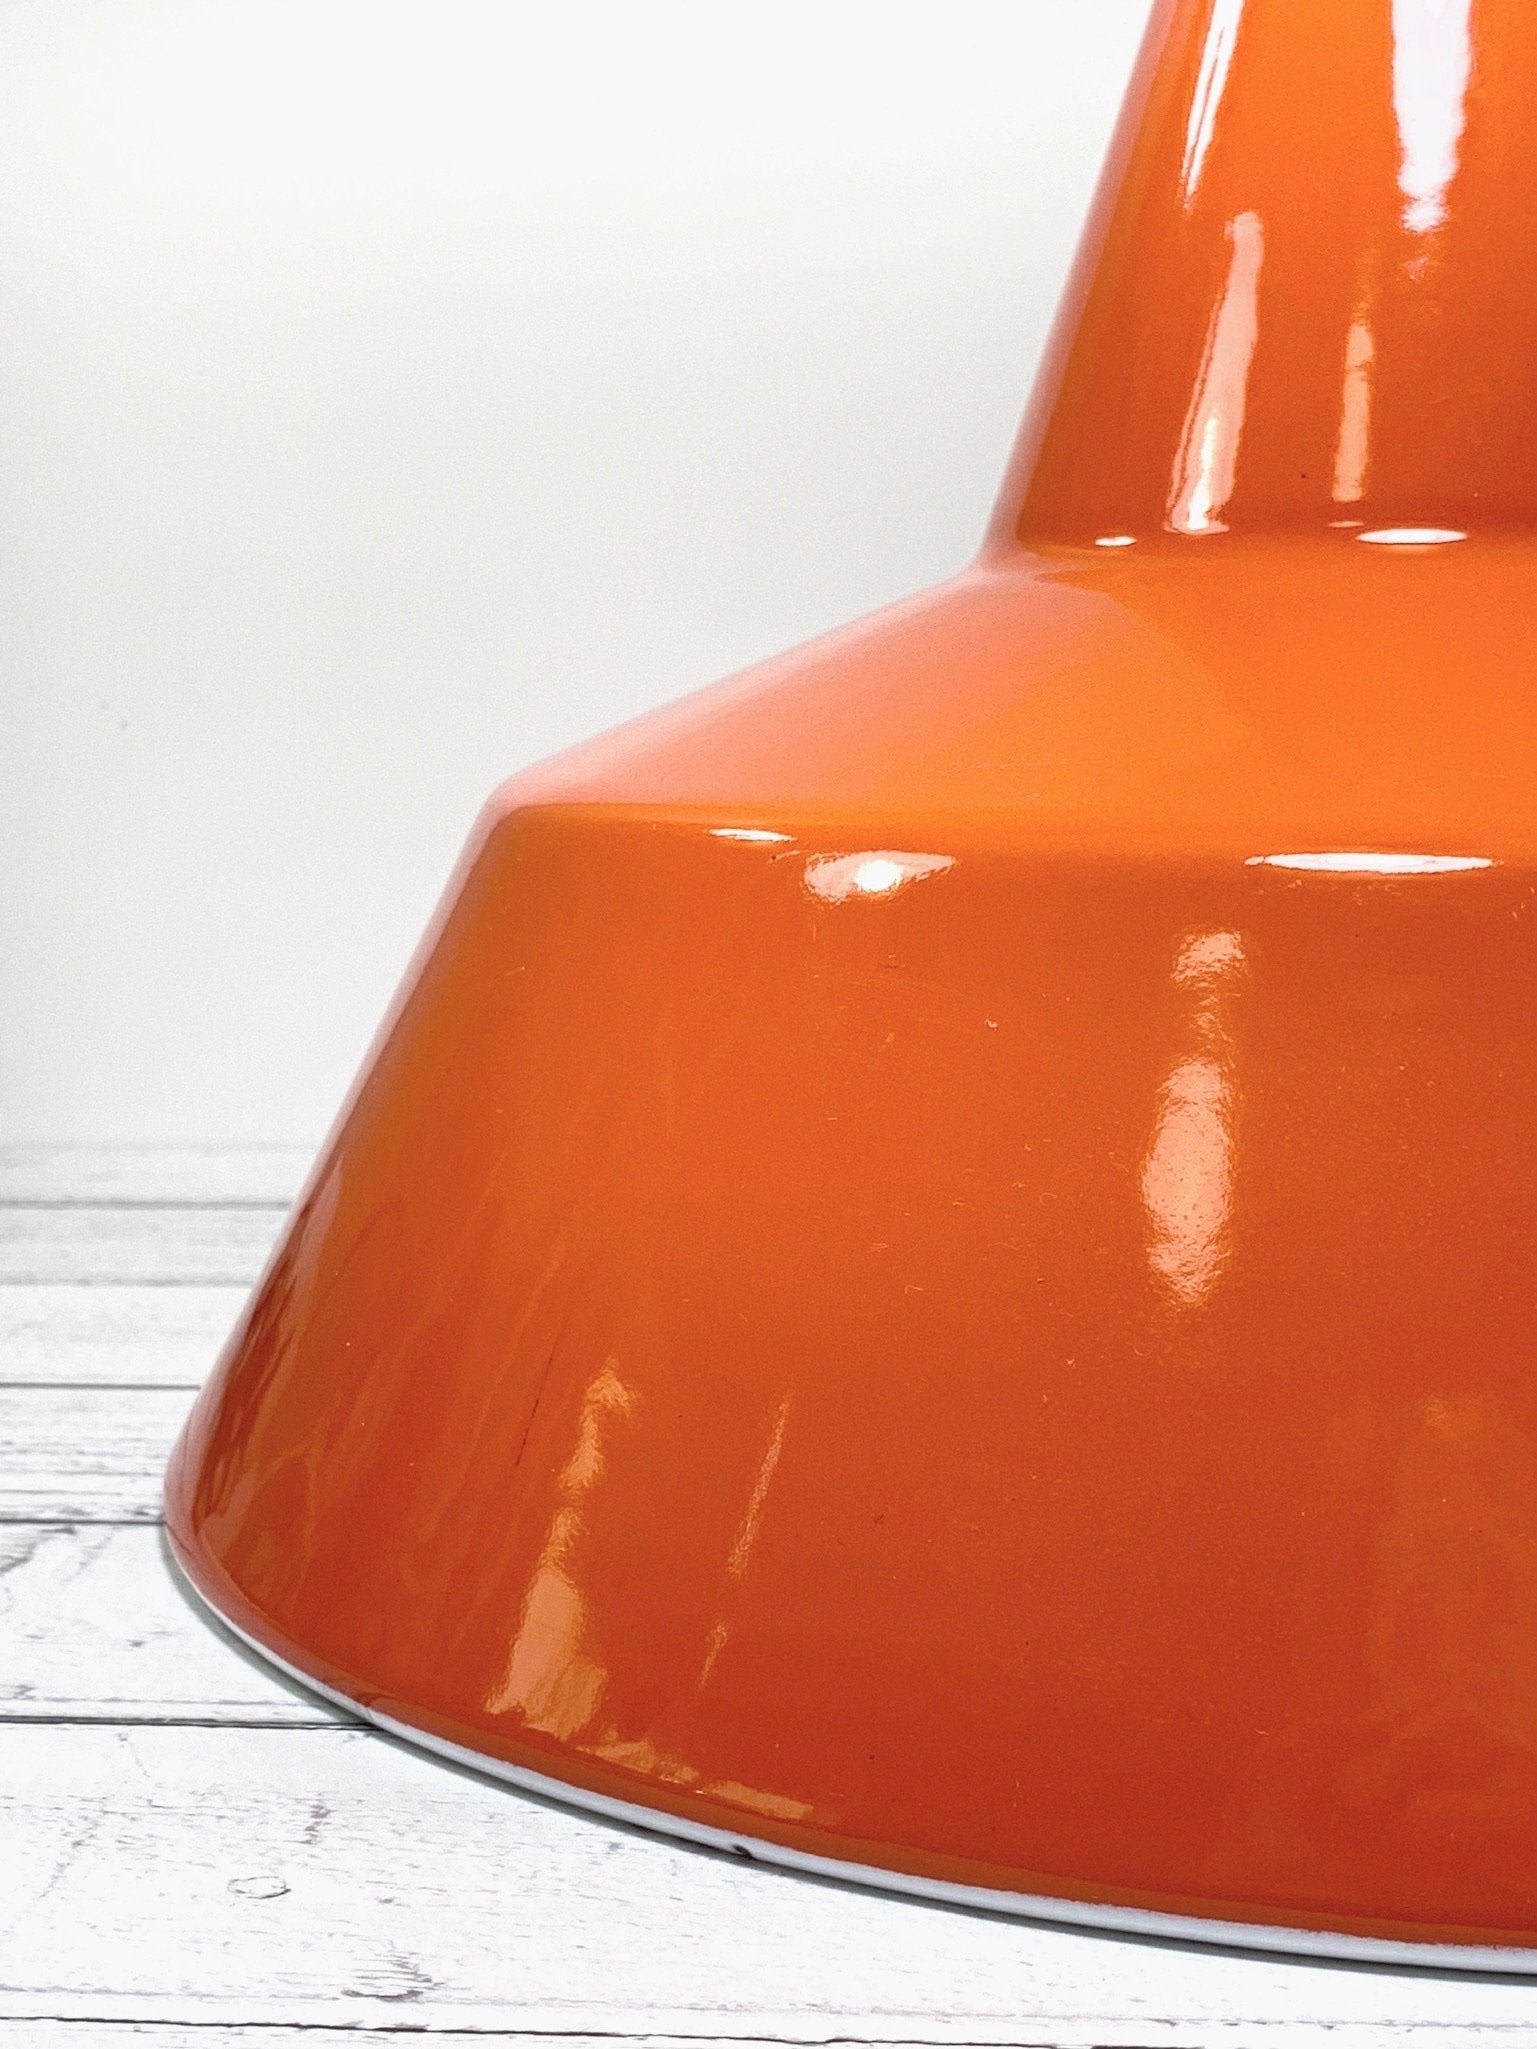 Louis Poulsen Danish Orange Enamel Workshop Pendant Lamp Industrial Design - Scandiwegians